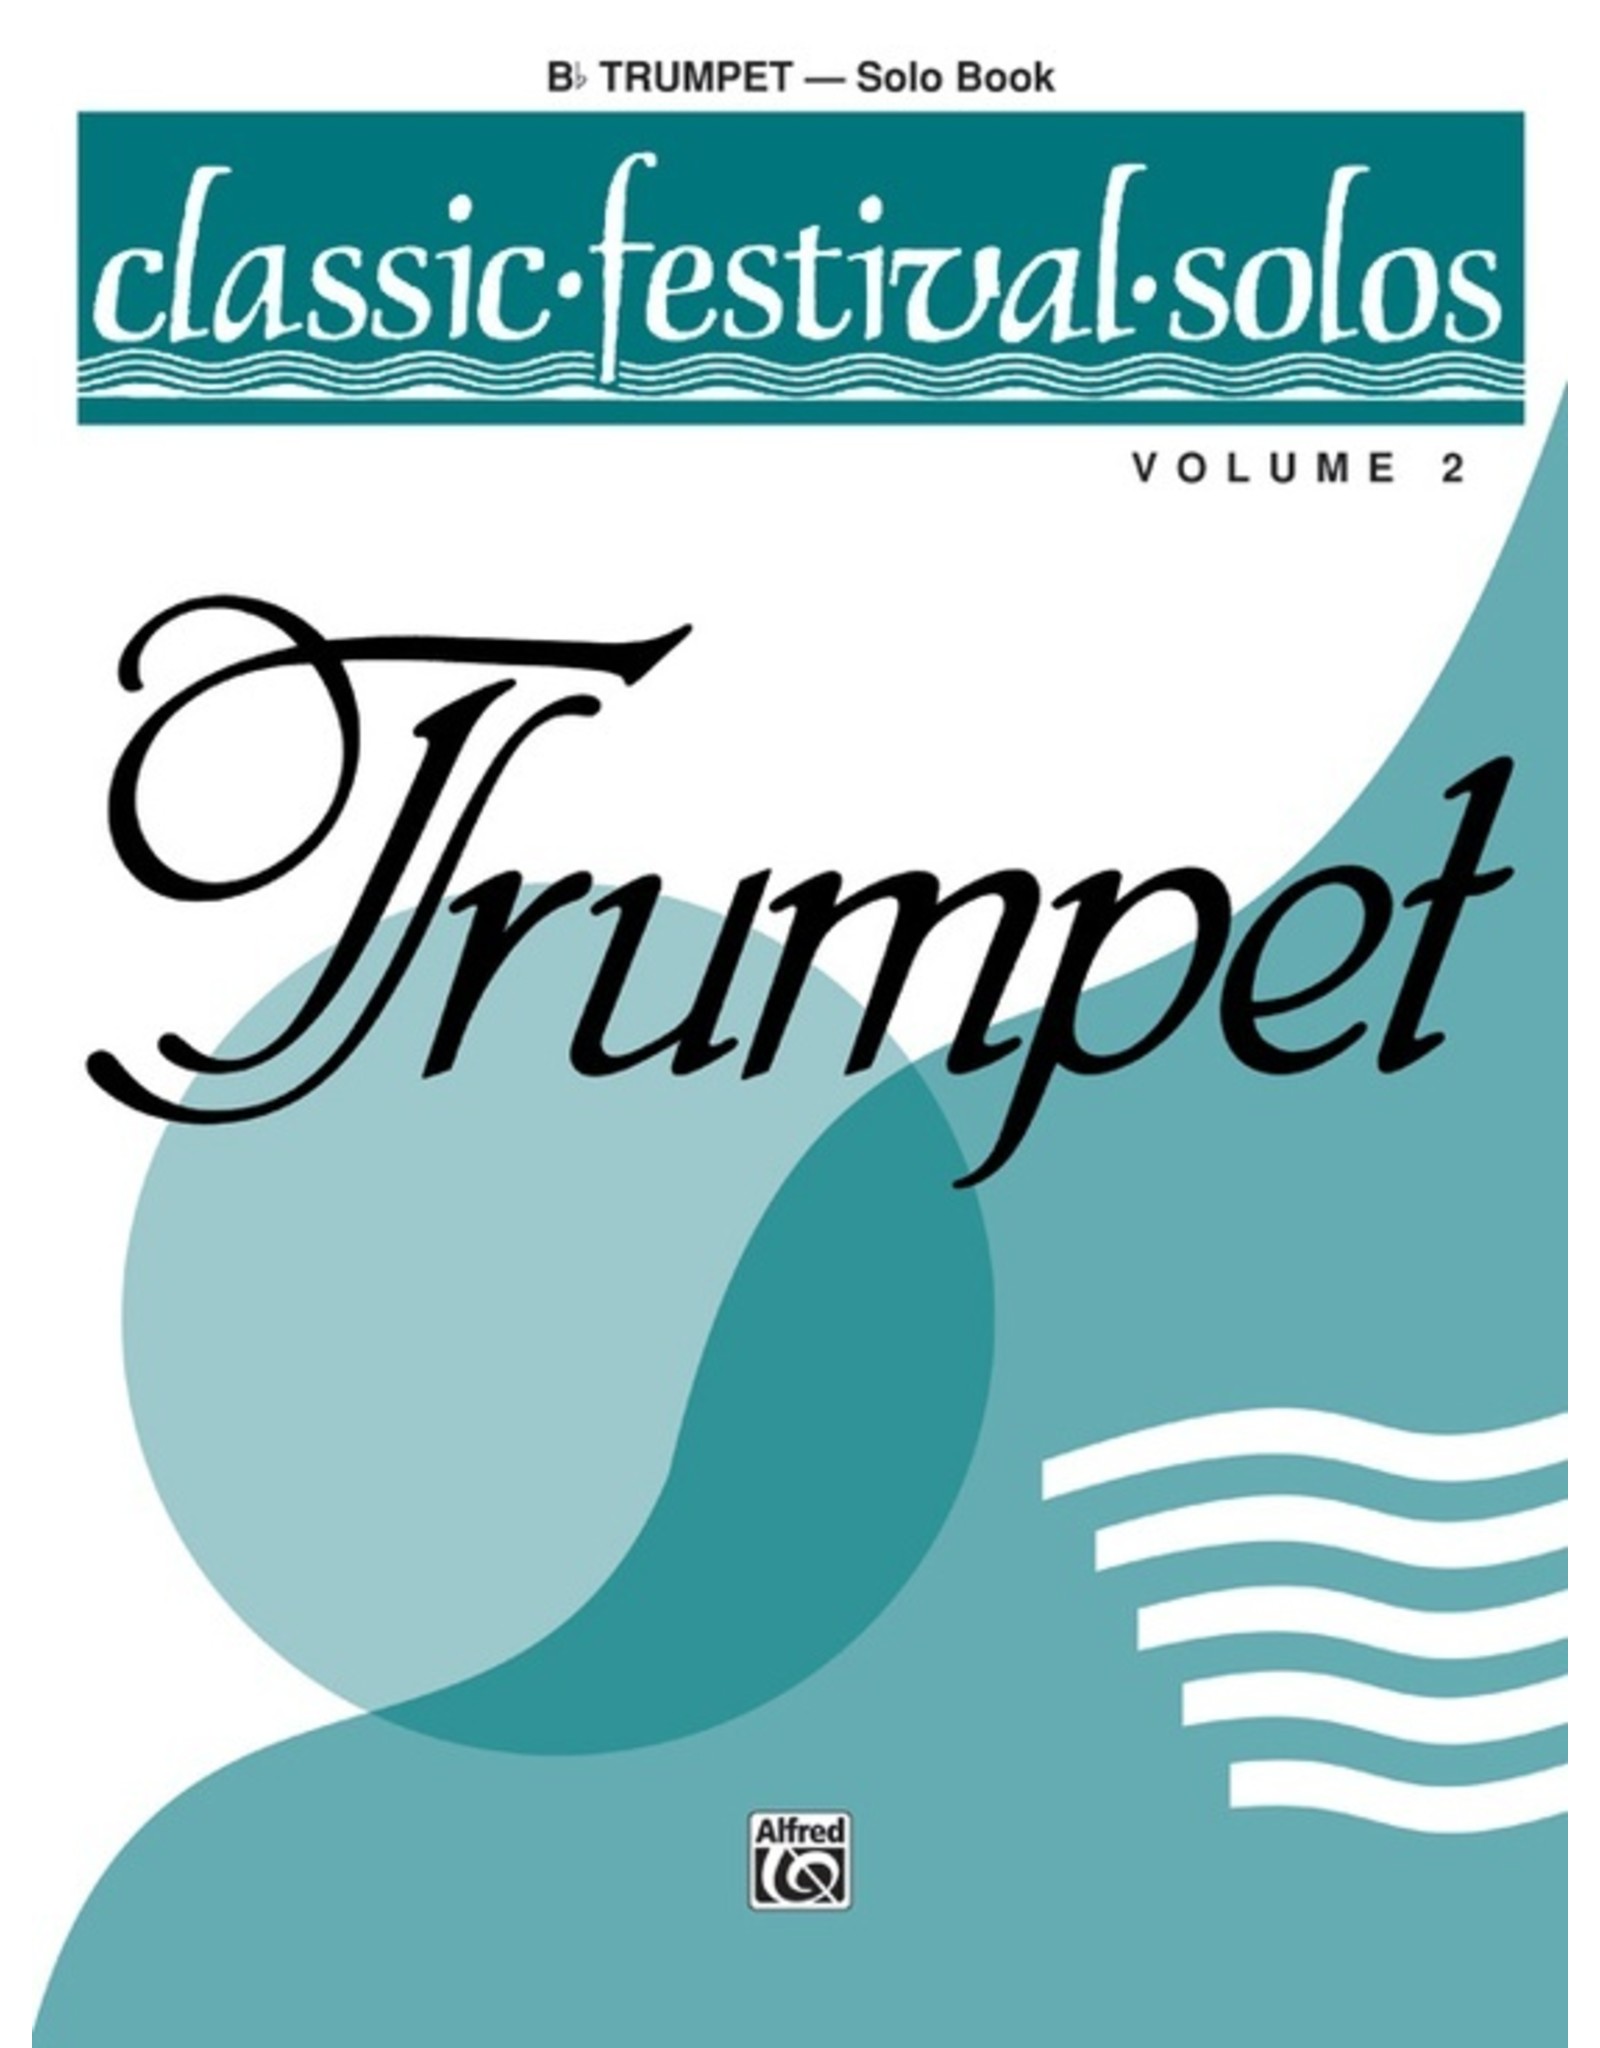 Alfred Classic Festival Solos (B-Flat Trumpet), Volume 2 Solo Book